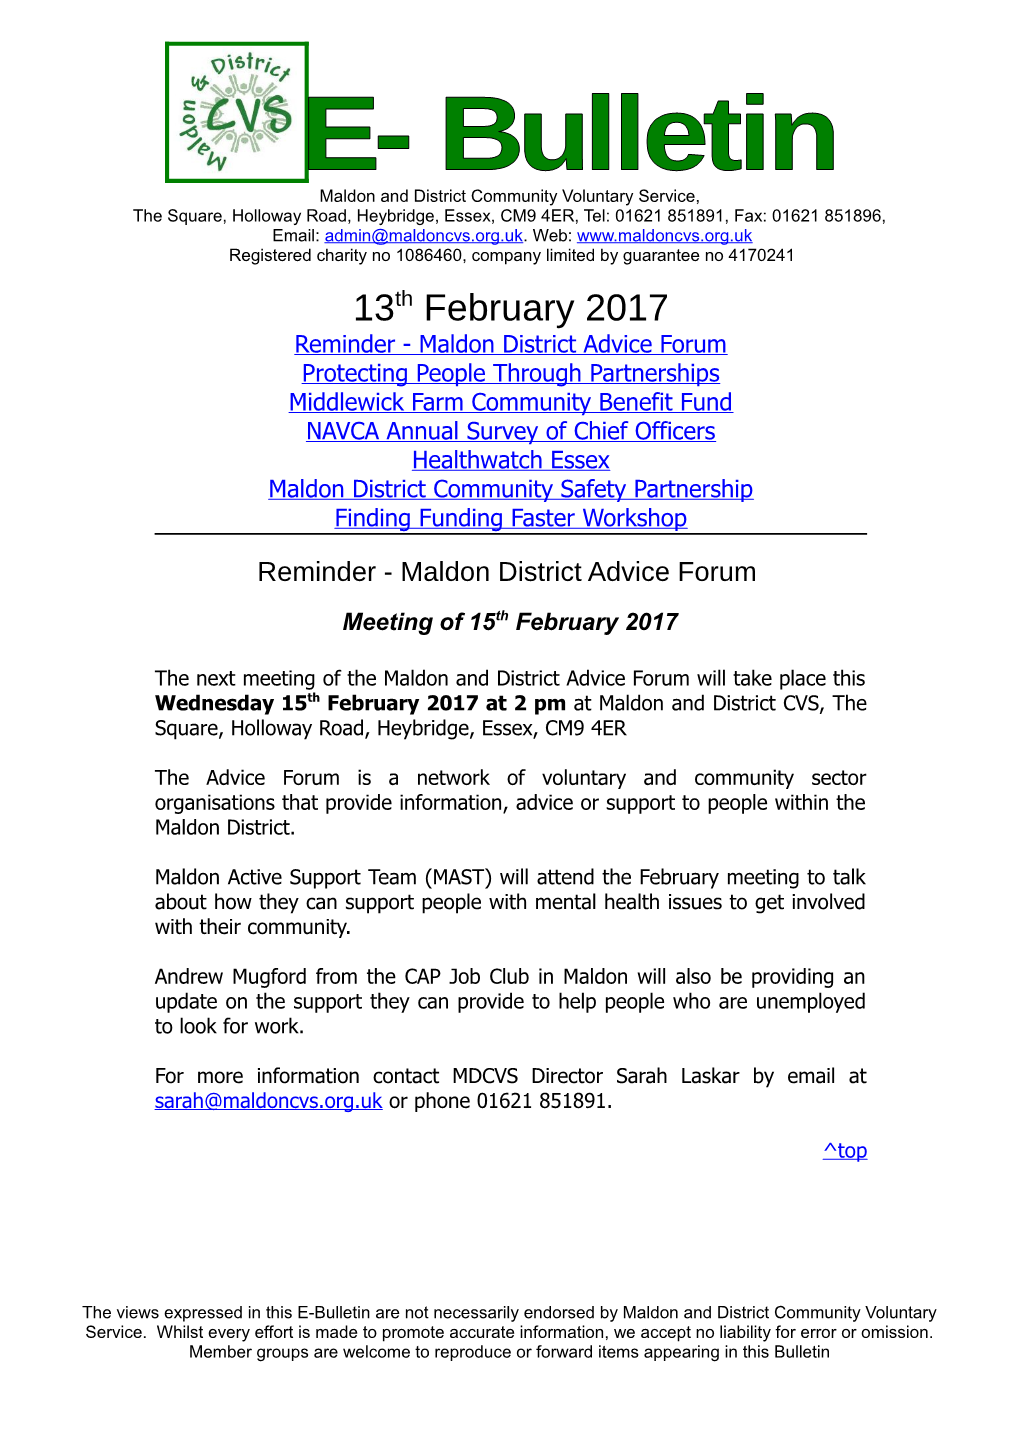 Reminder - Maldon District Advice Forum